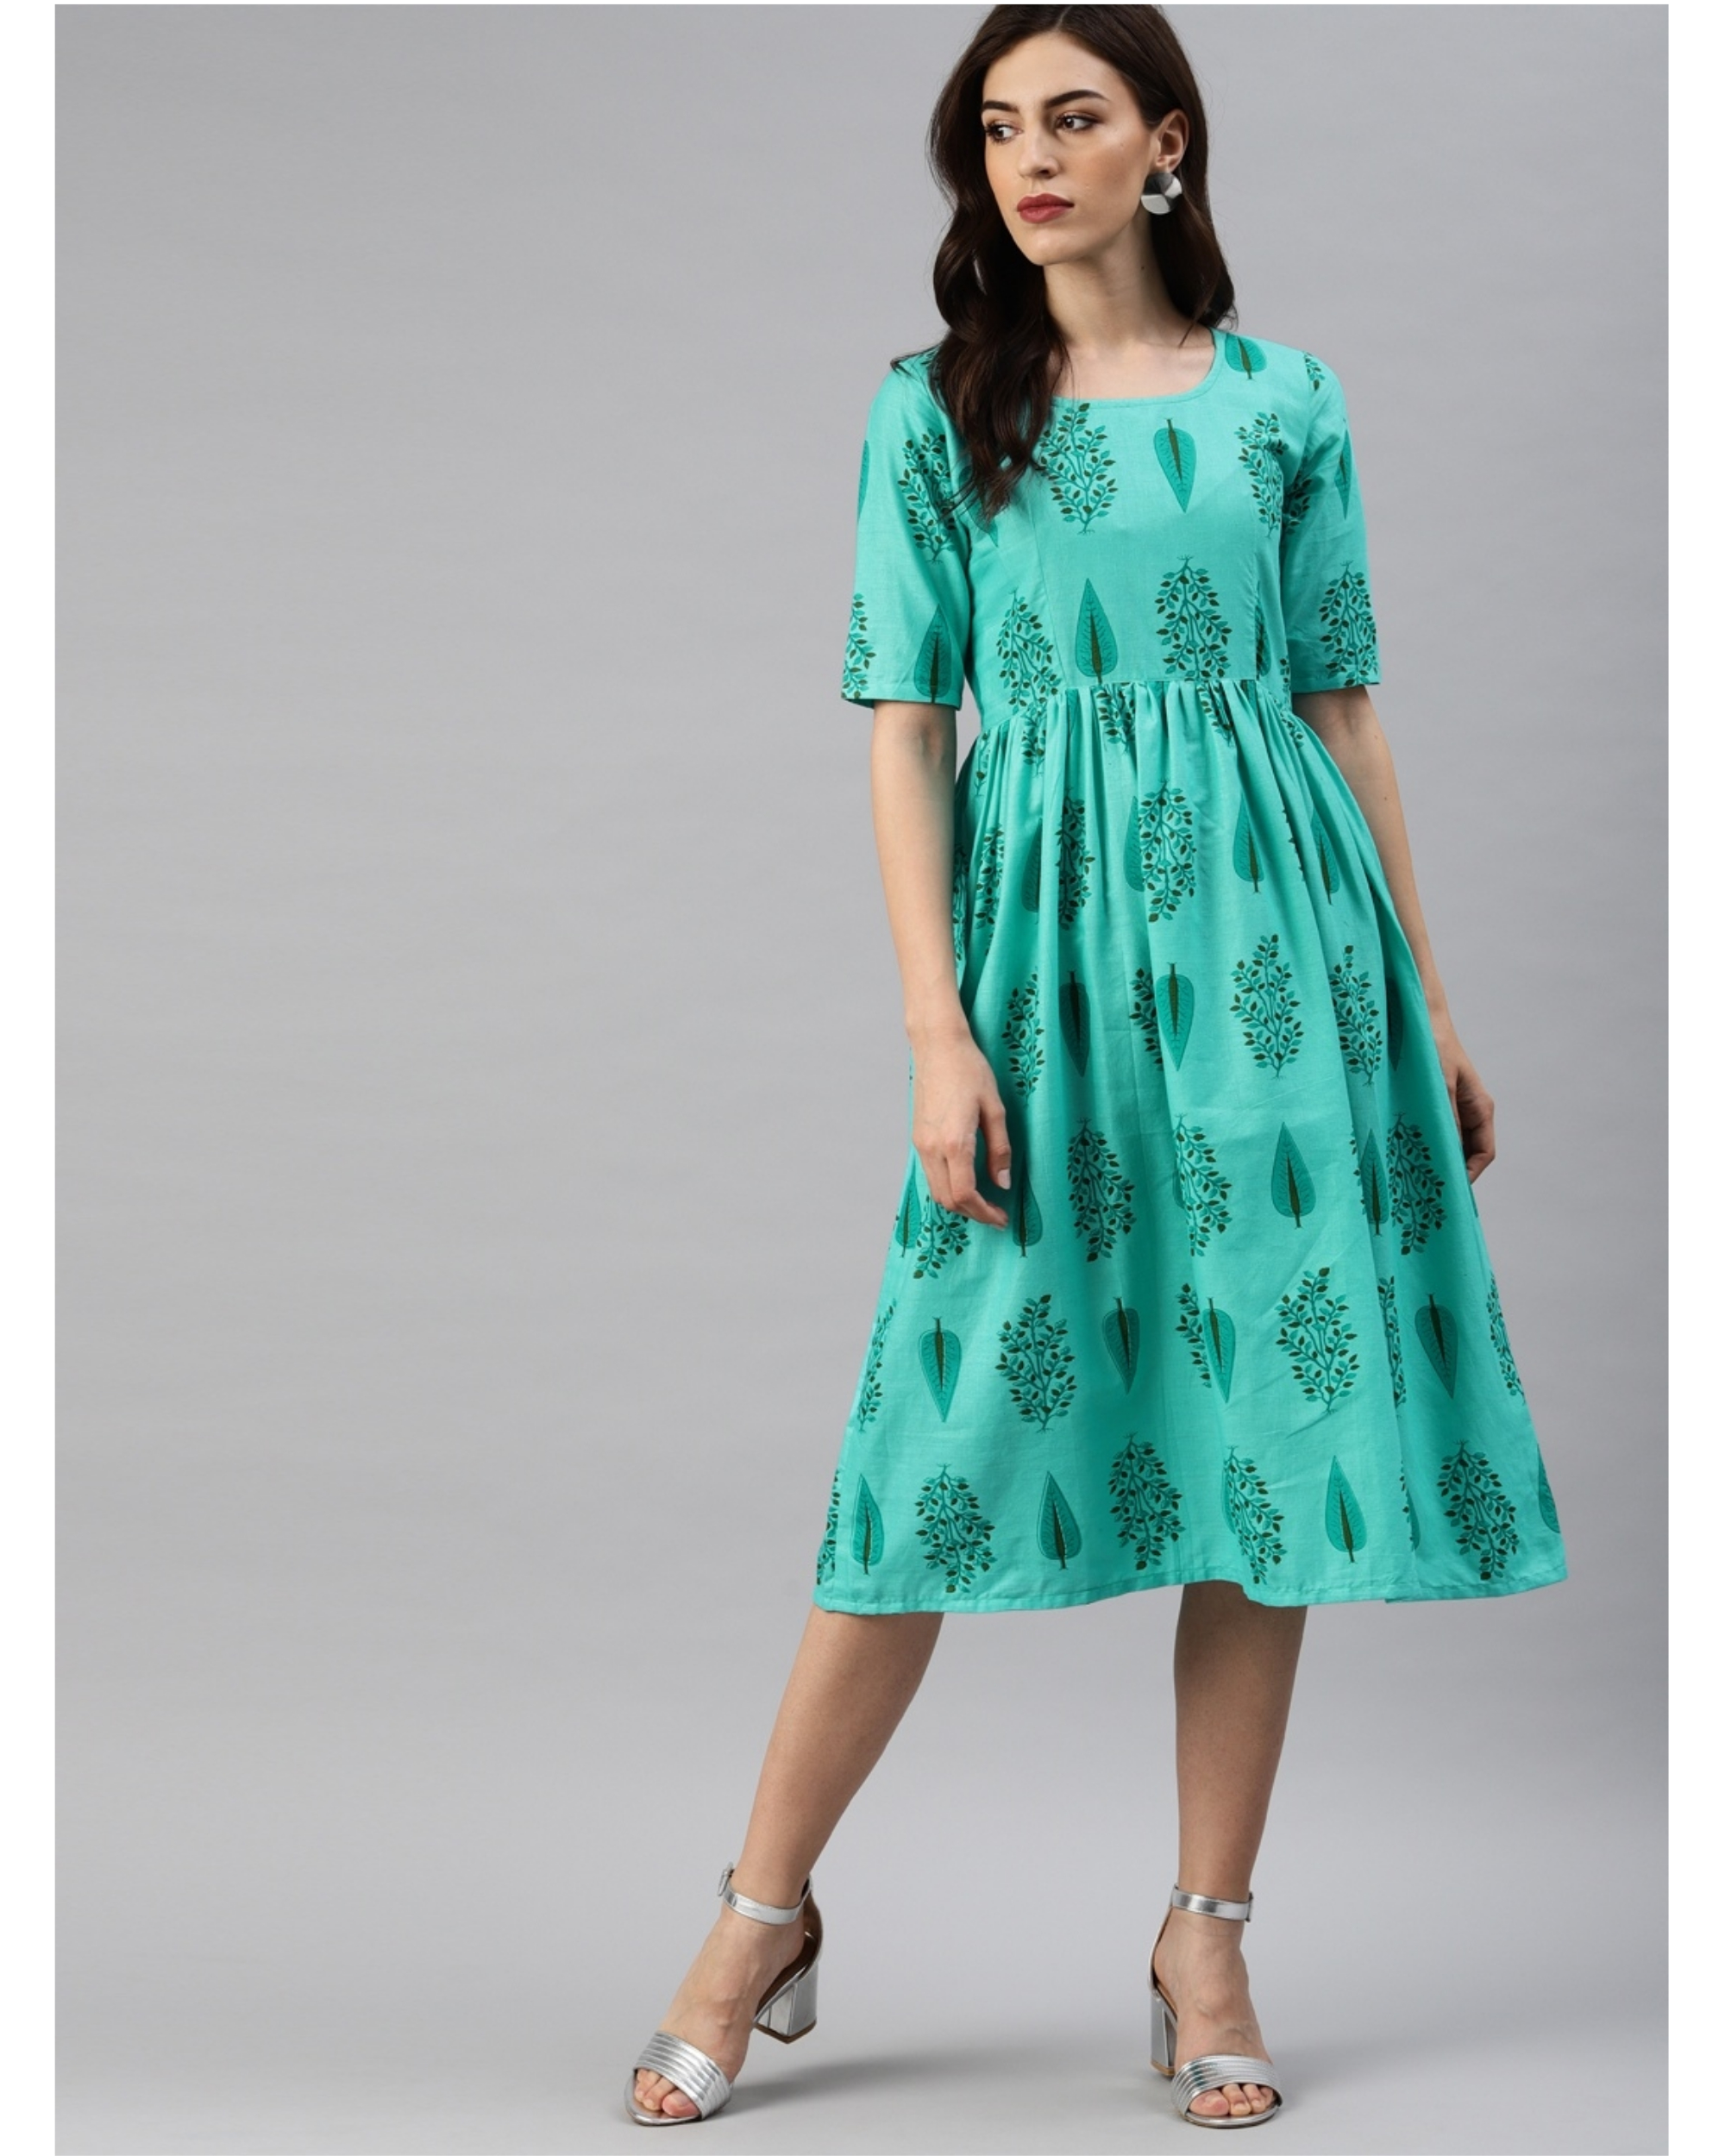 Blue green printed a-line dress by Swishchick | The Secret Label